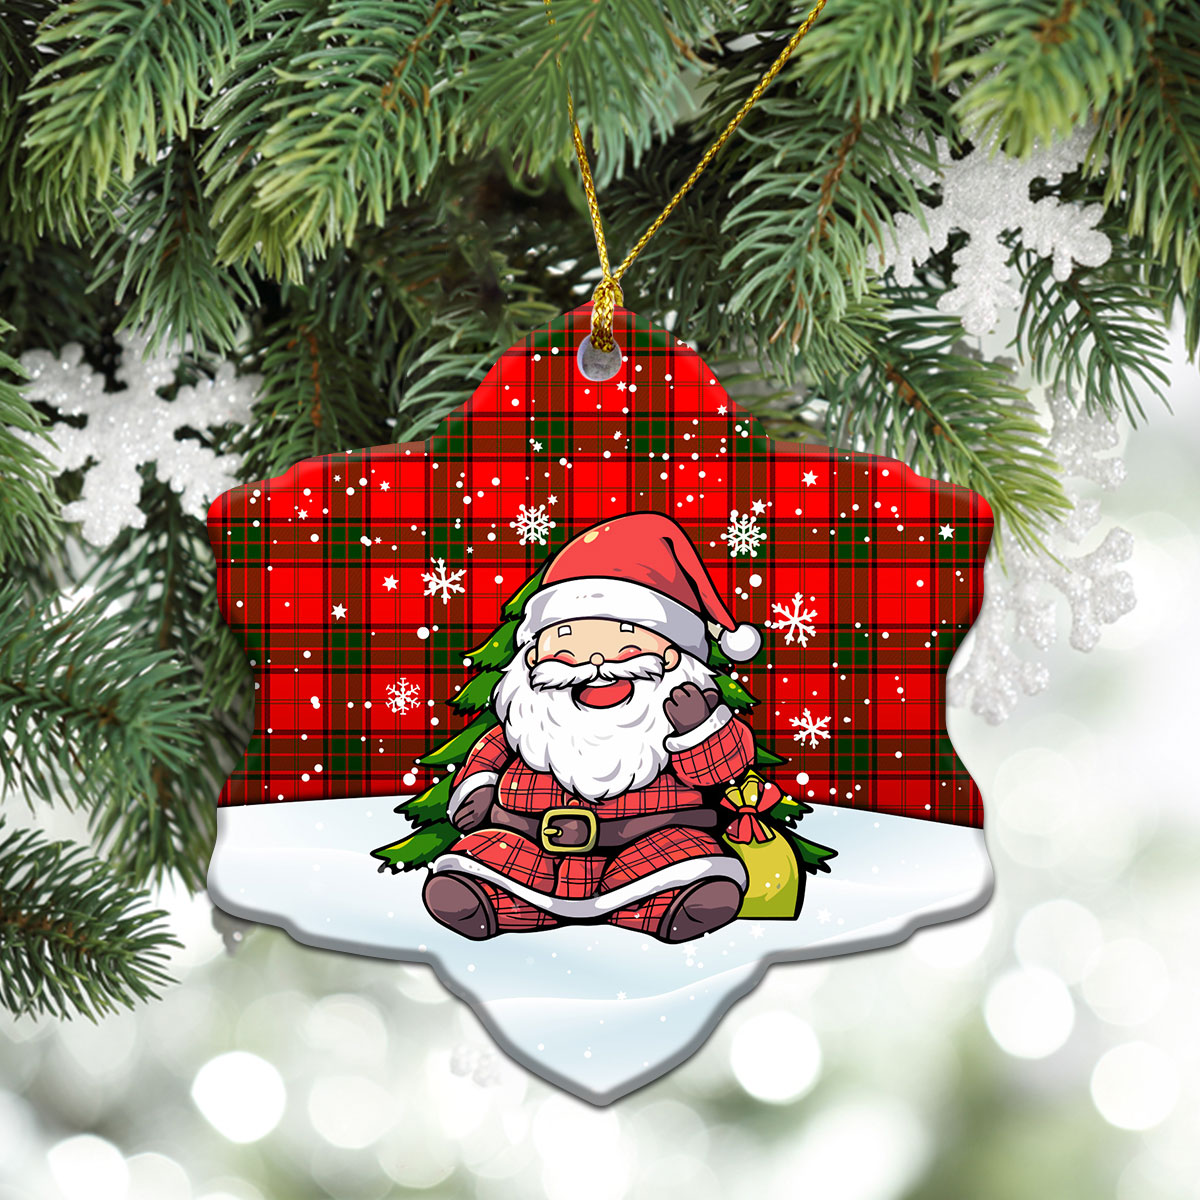 Maxtone Tartan Christmas Ceramic Ornament - Scottish Santa Style